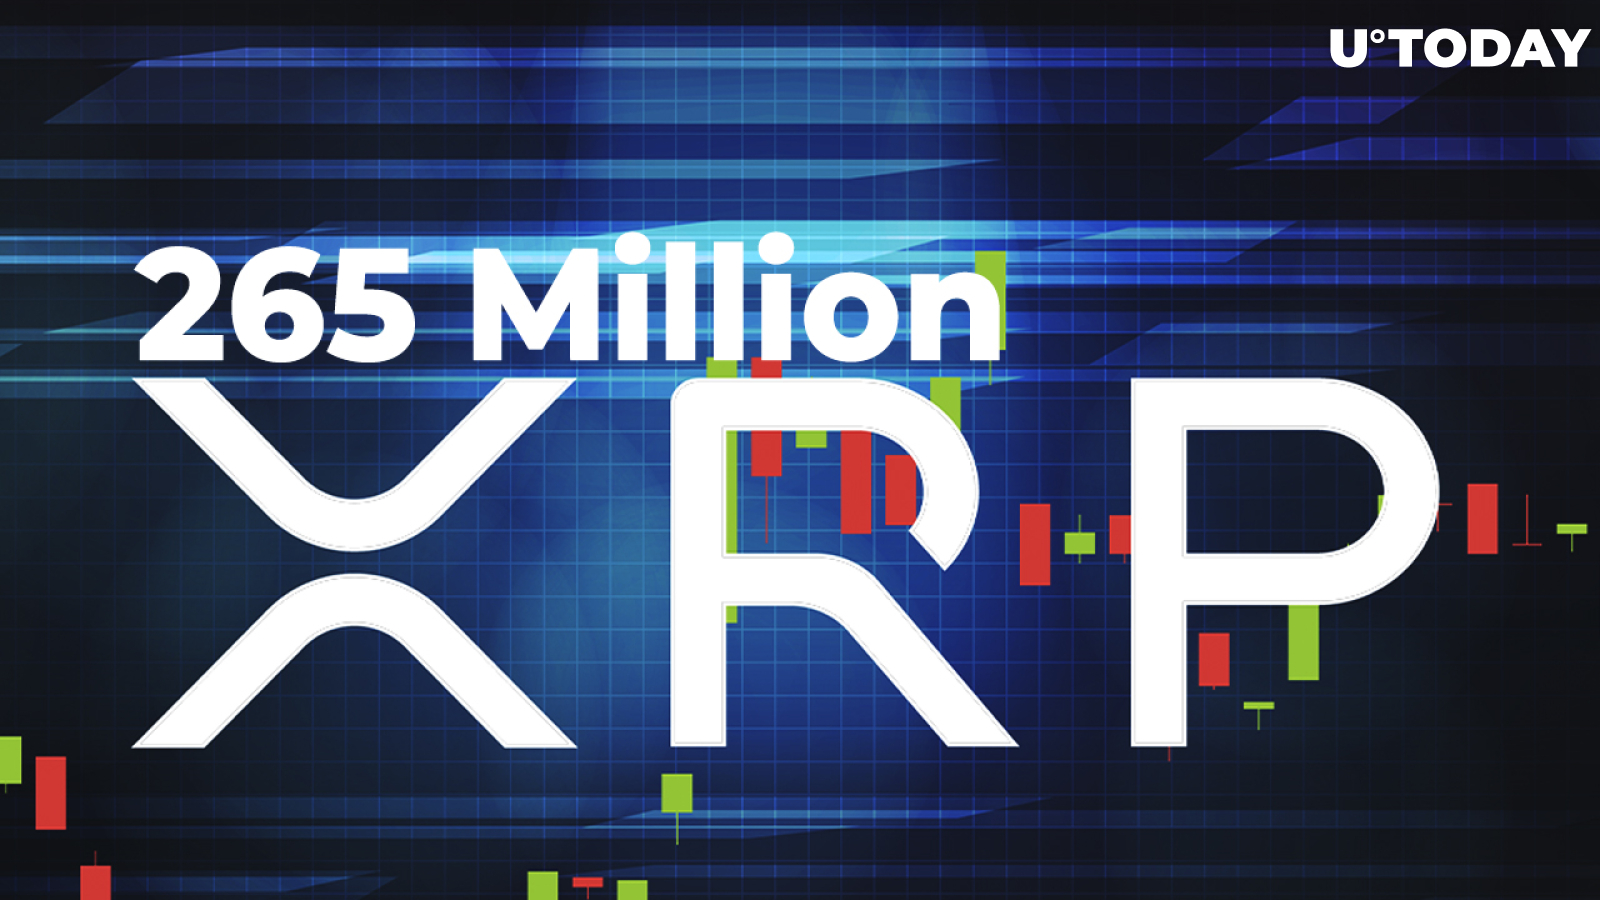 Ripple Helps Shift 265 Million XRP, Sending 150 Million Coins in One Go